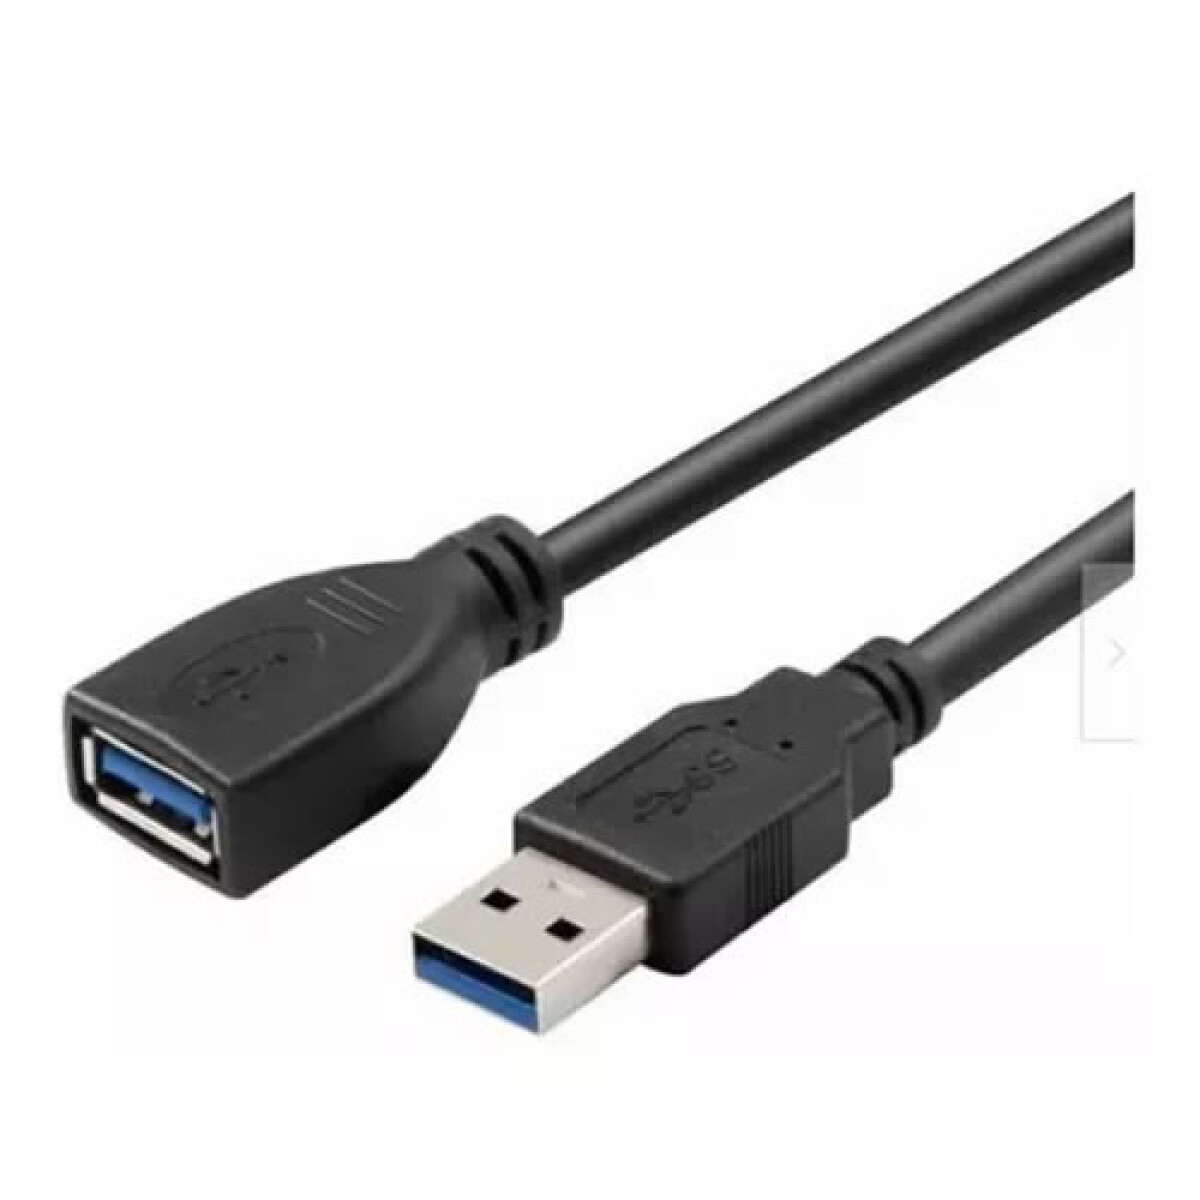 Cable USB A 3.0 macho - hembra 